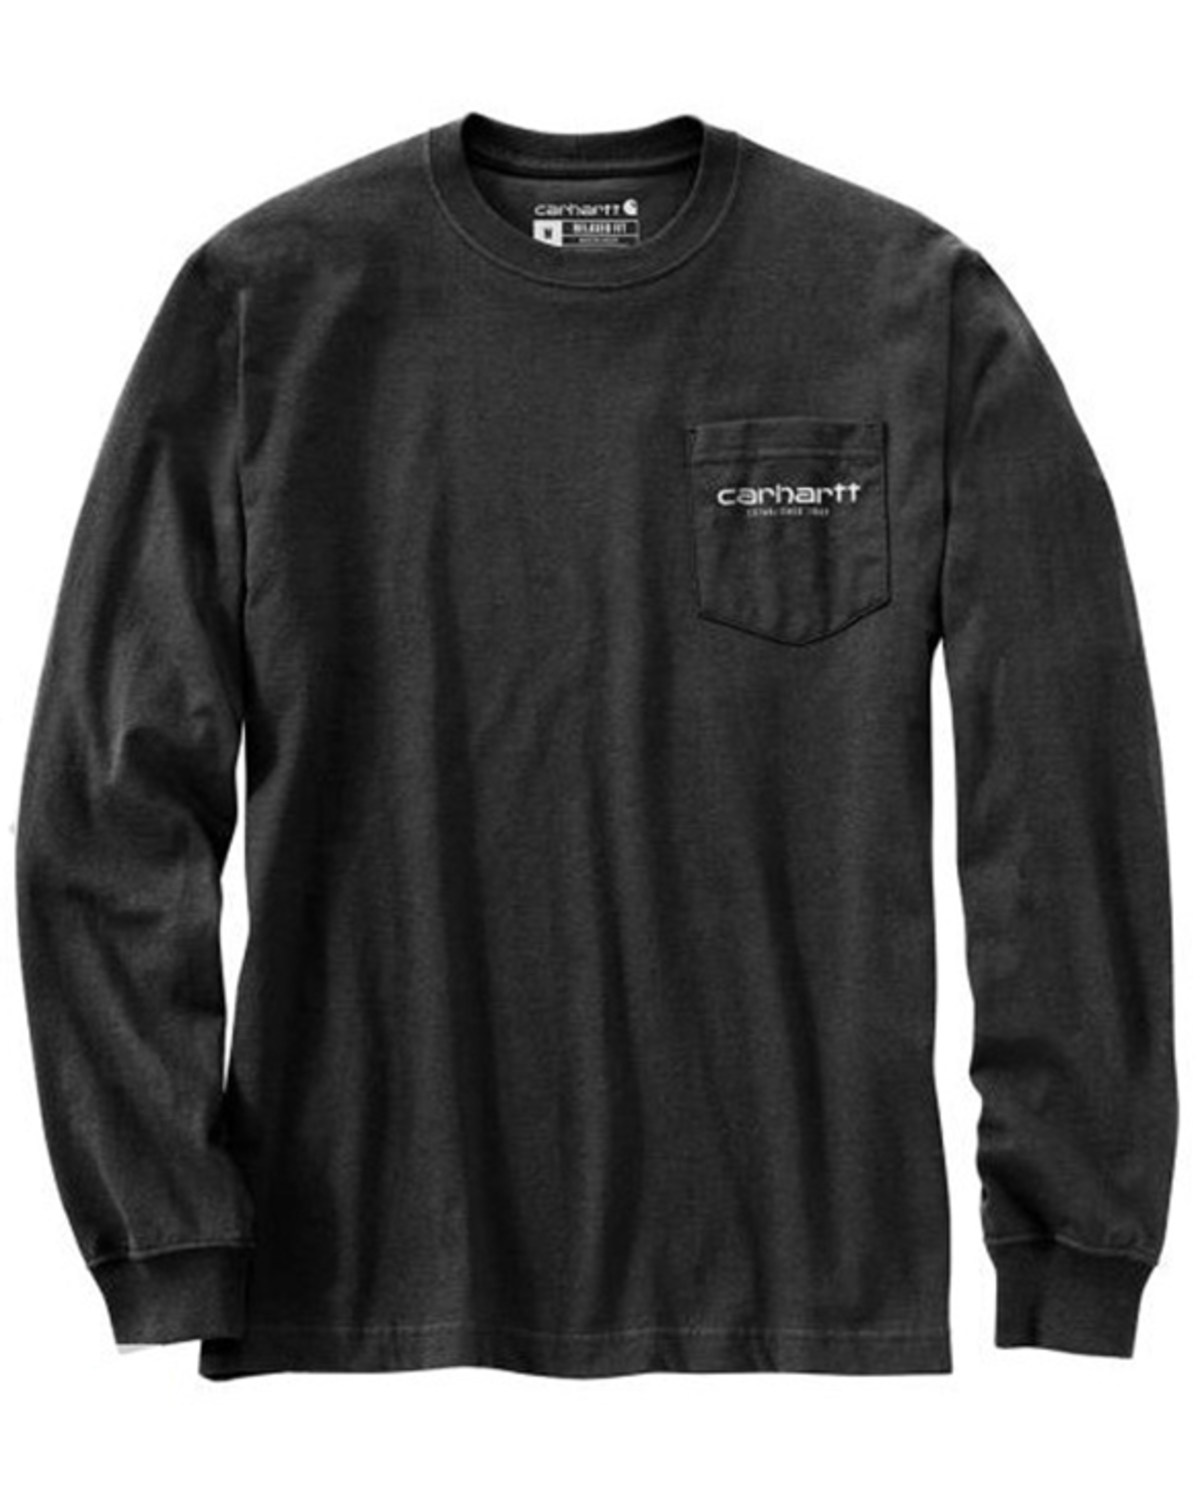 Carhartt Men's Relaxed Fit Heavyweight Long Sleeve Pocket C Graphic T-Shirt